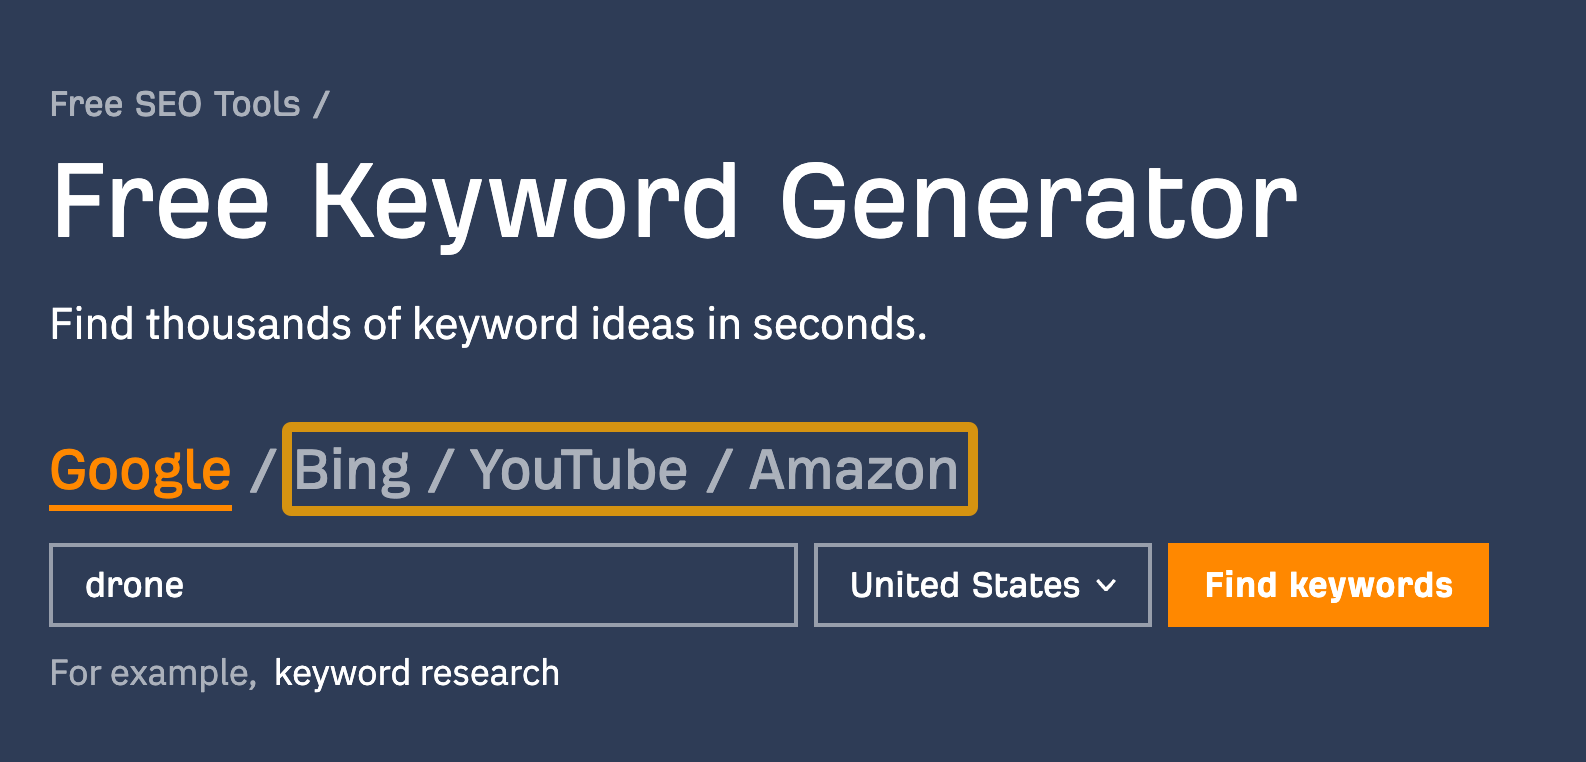 Search engines, via Ahrefs' free keyword generator